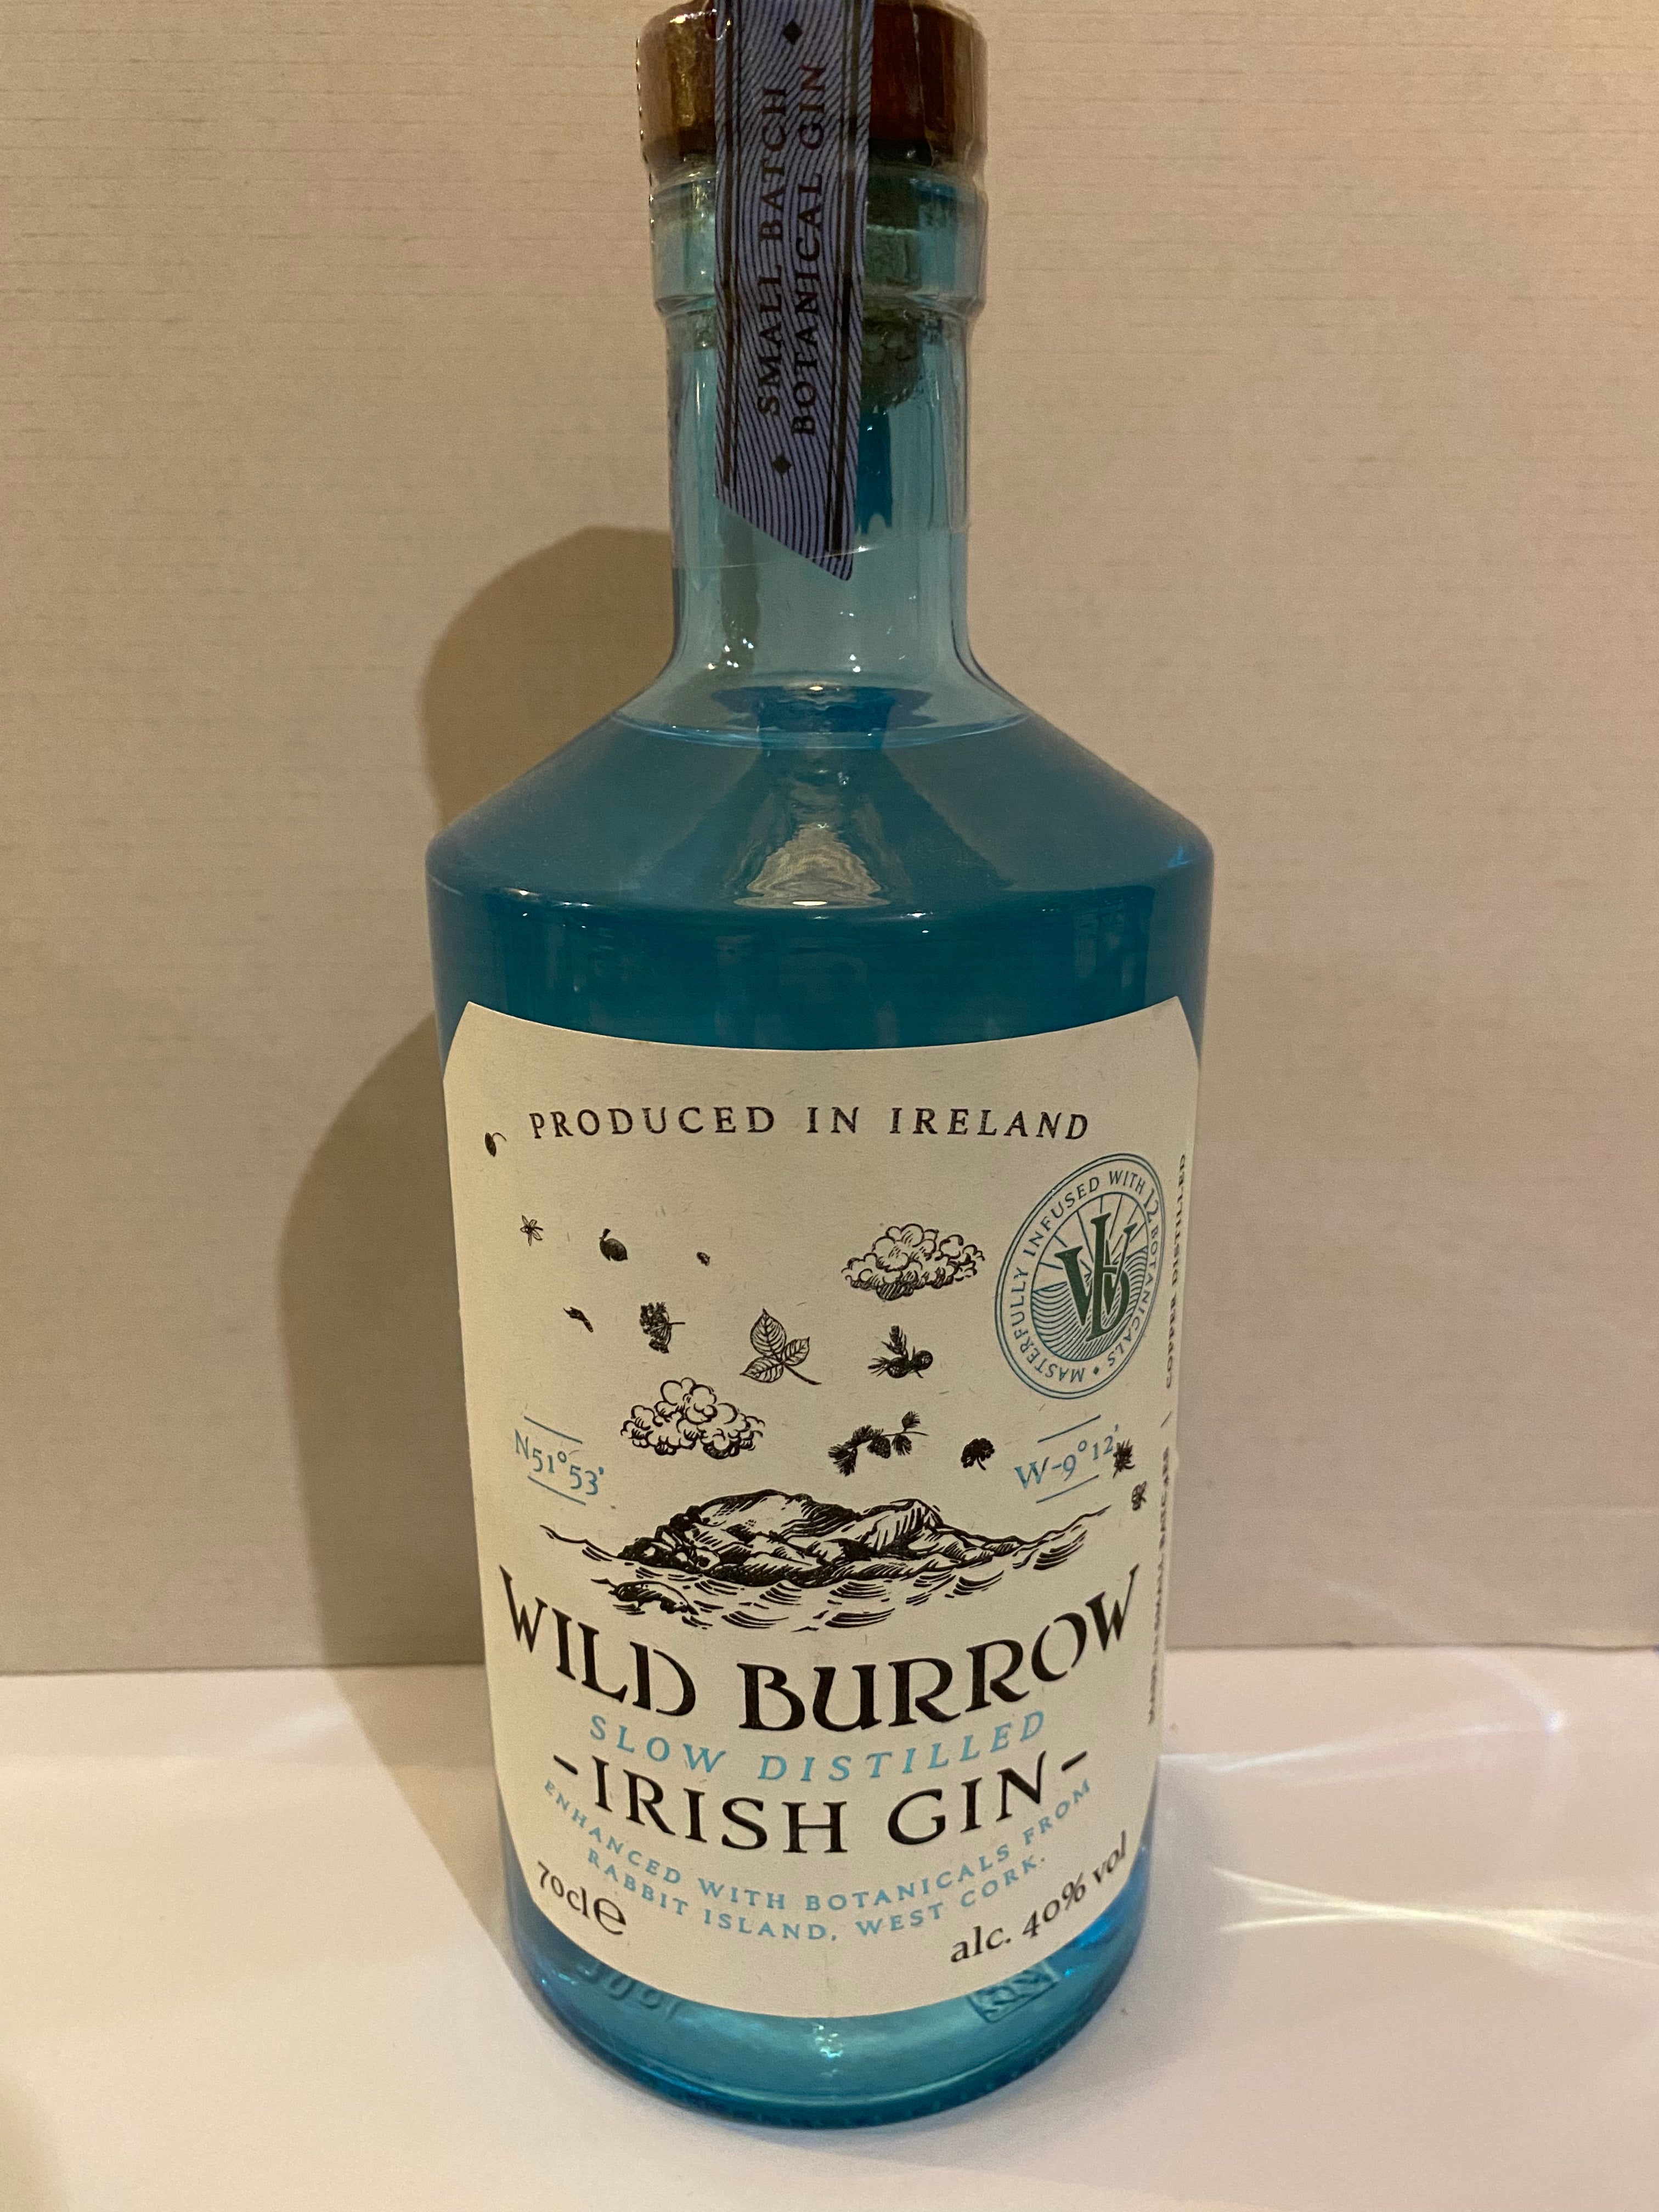 House Slow Burrow – Wild Distilled Gin Gin Irish of